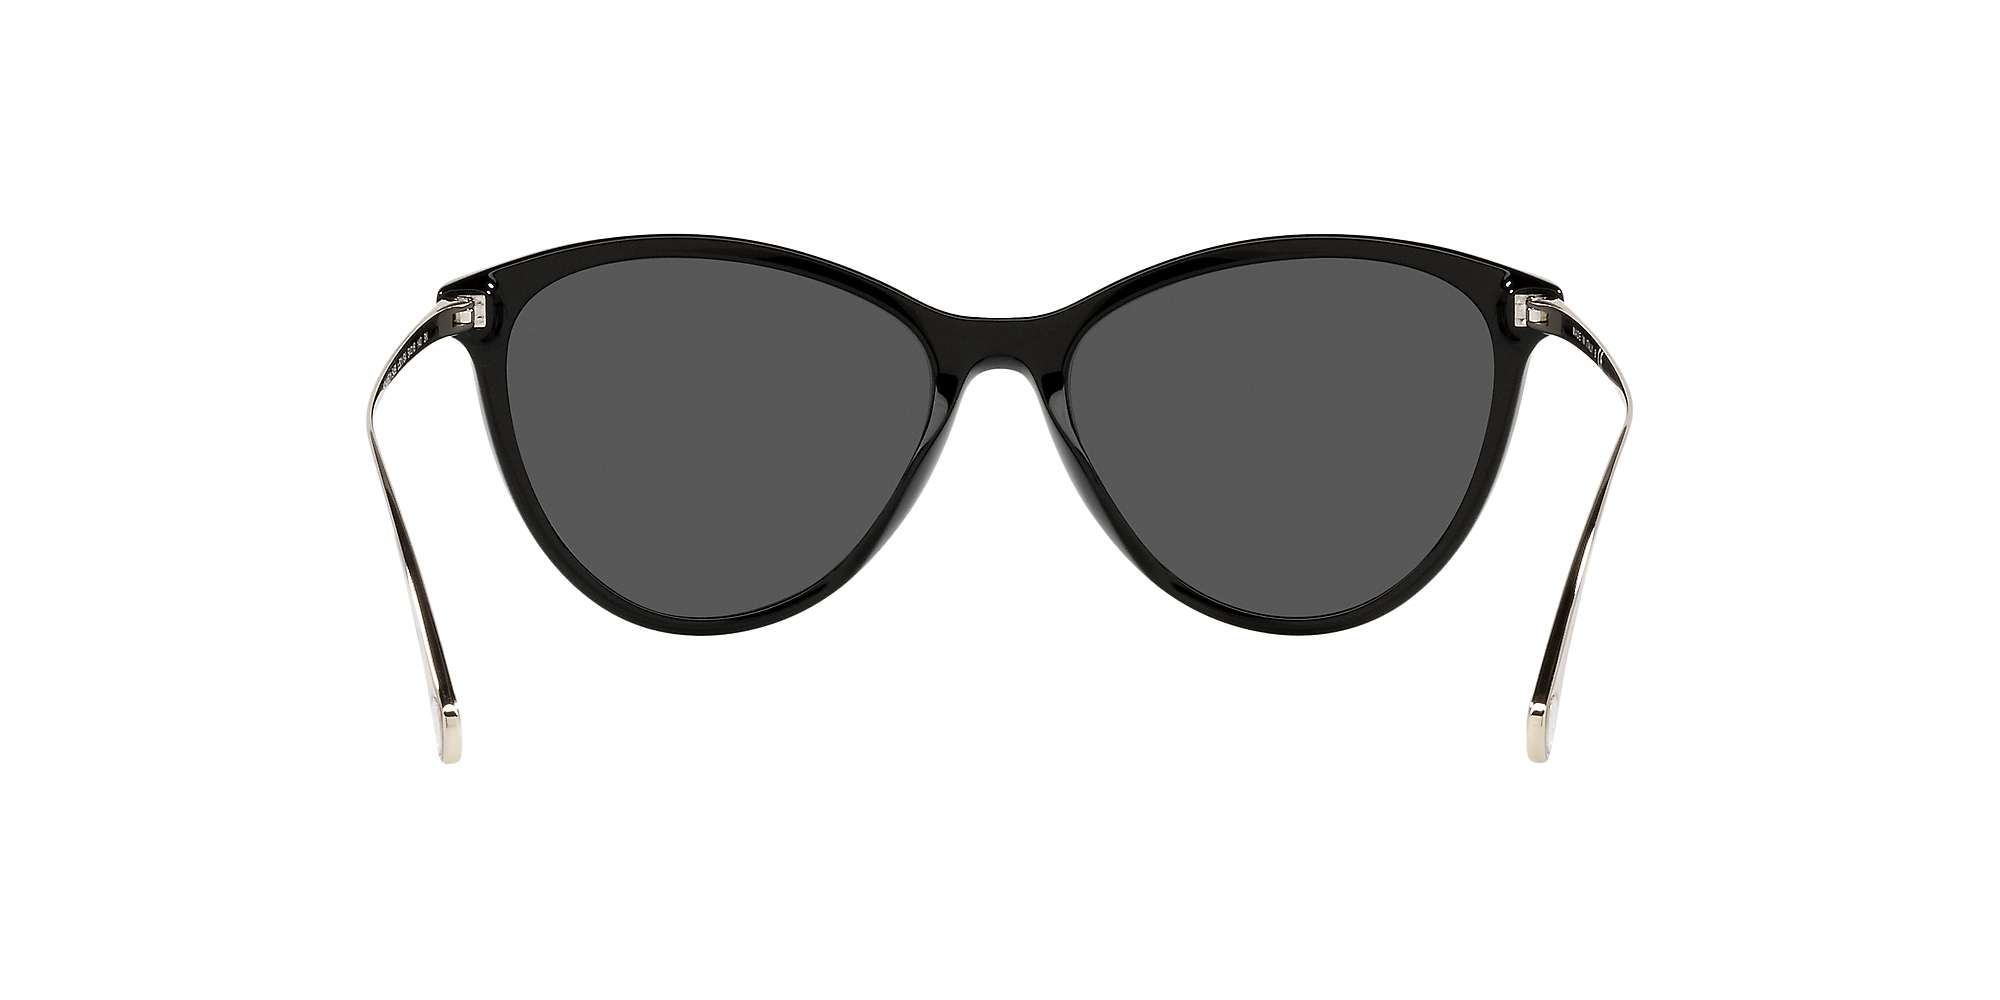 Buy CHANEL CH5459 Women's Phantos Sunglasses, Black Online at johnlewis.com